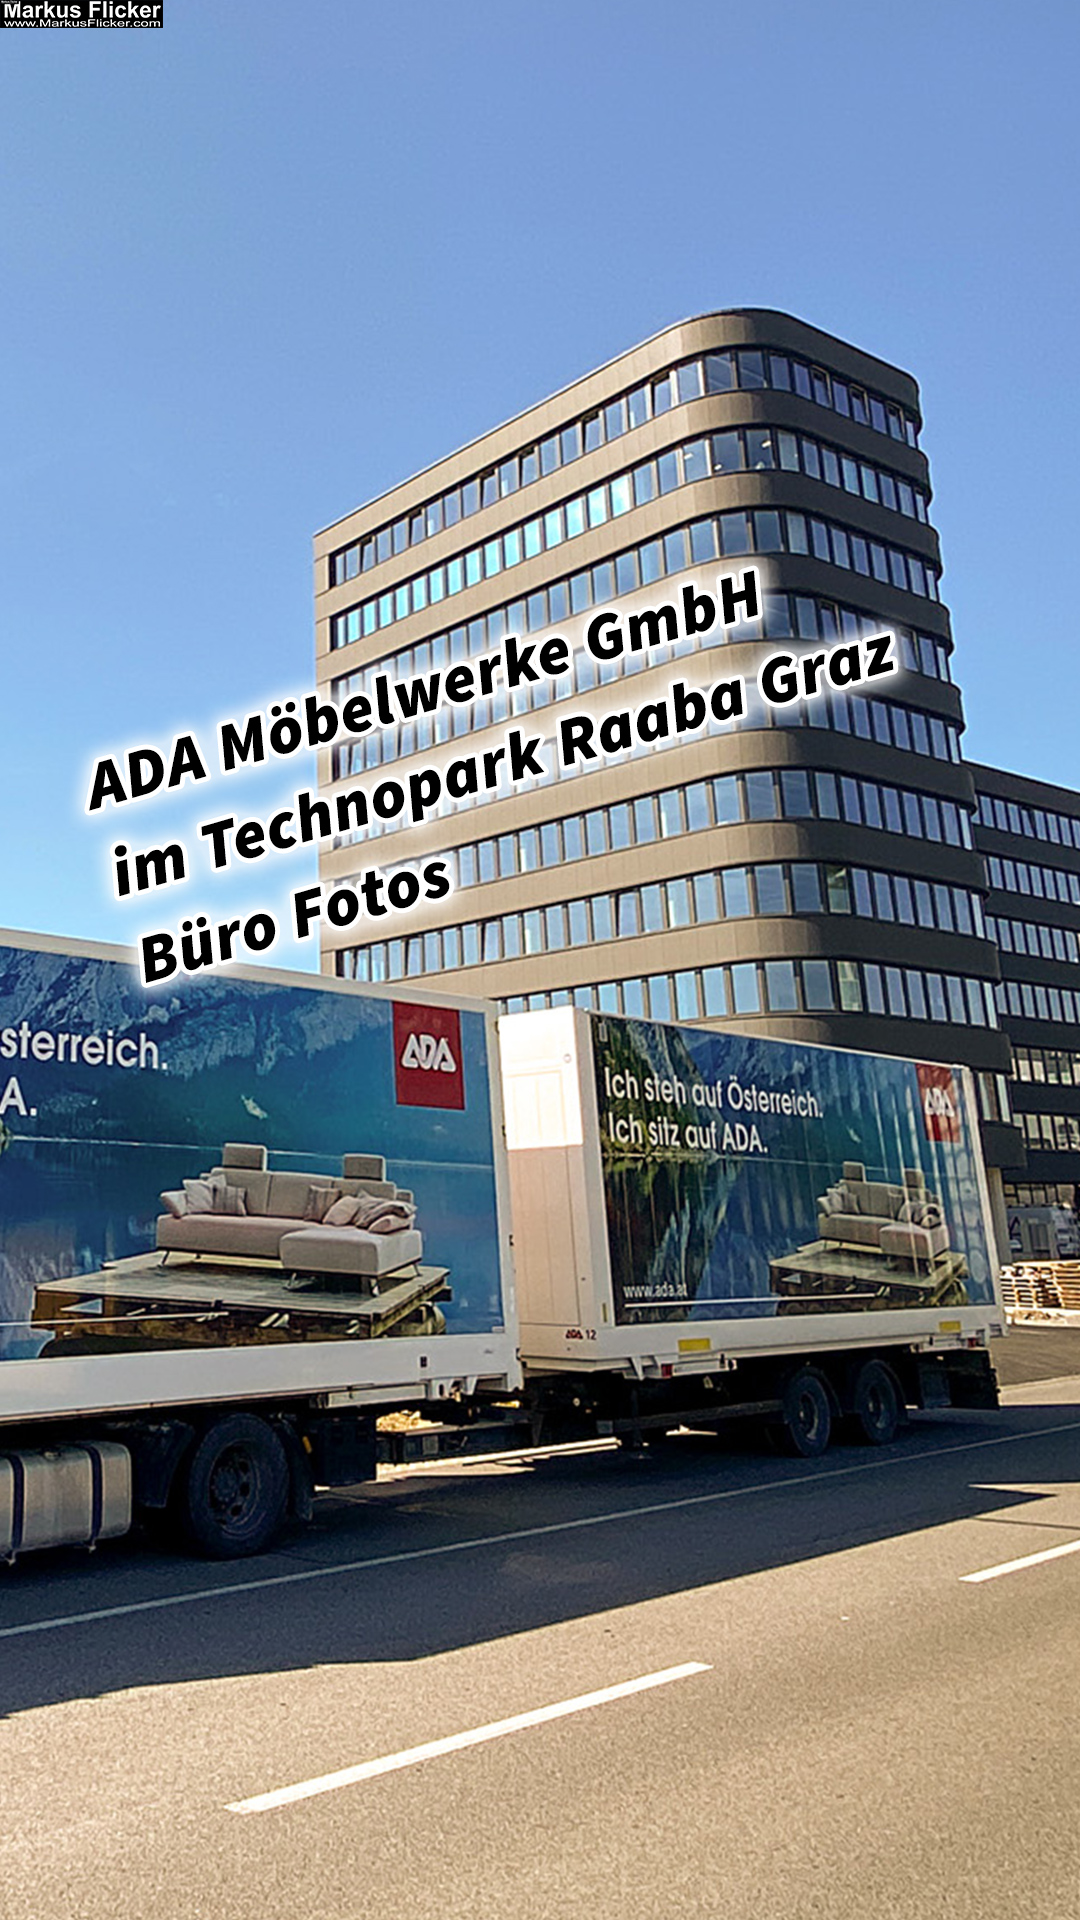 ADA Möbelwerke GmbH im Technopark Raaba Graz Büro Fotos